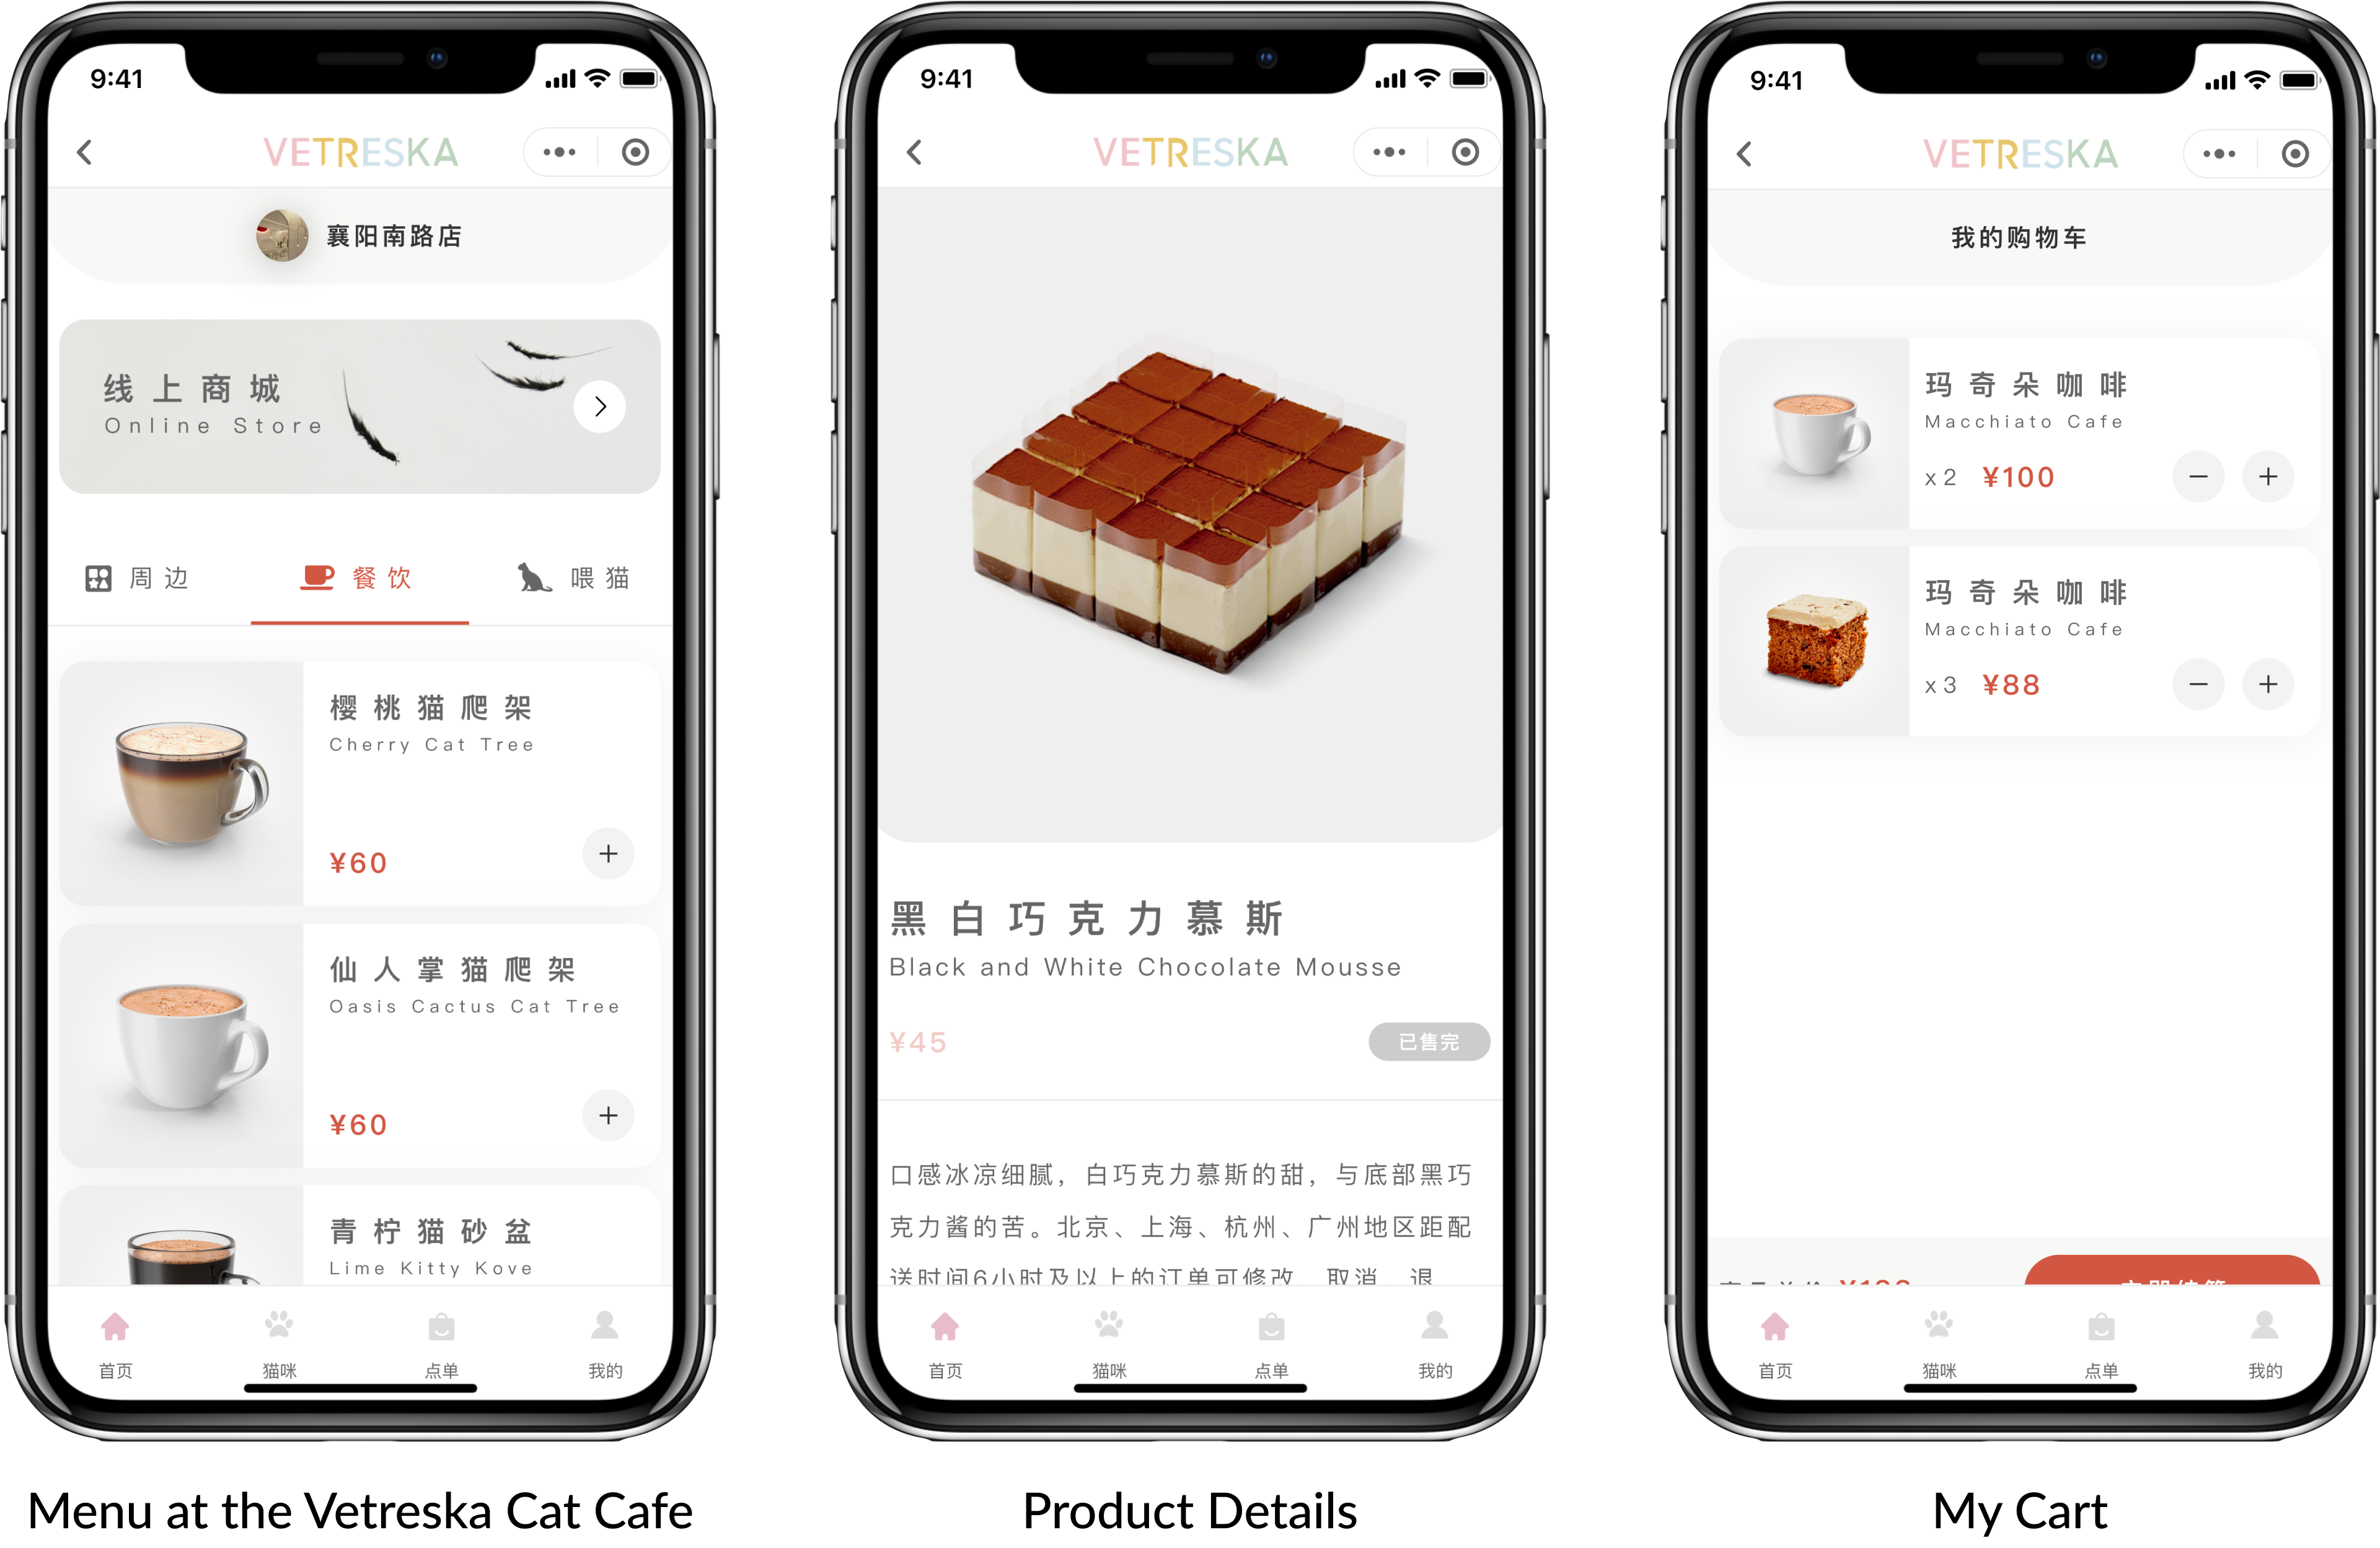 Users can order from the Vetreska Cat Cafe menu via the WeChat Mini Program